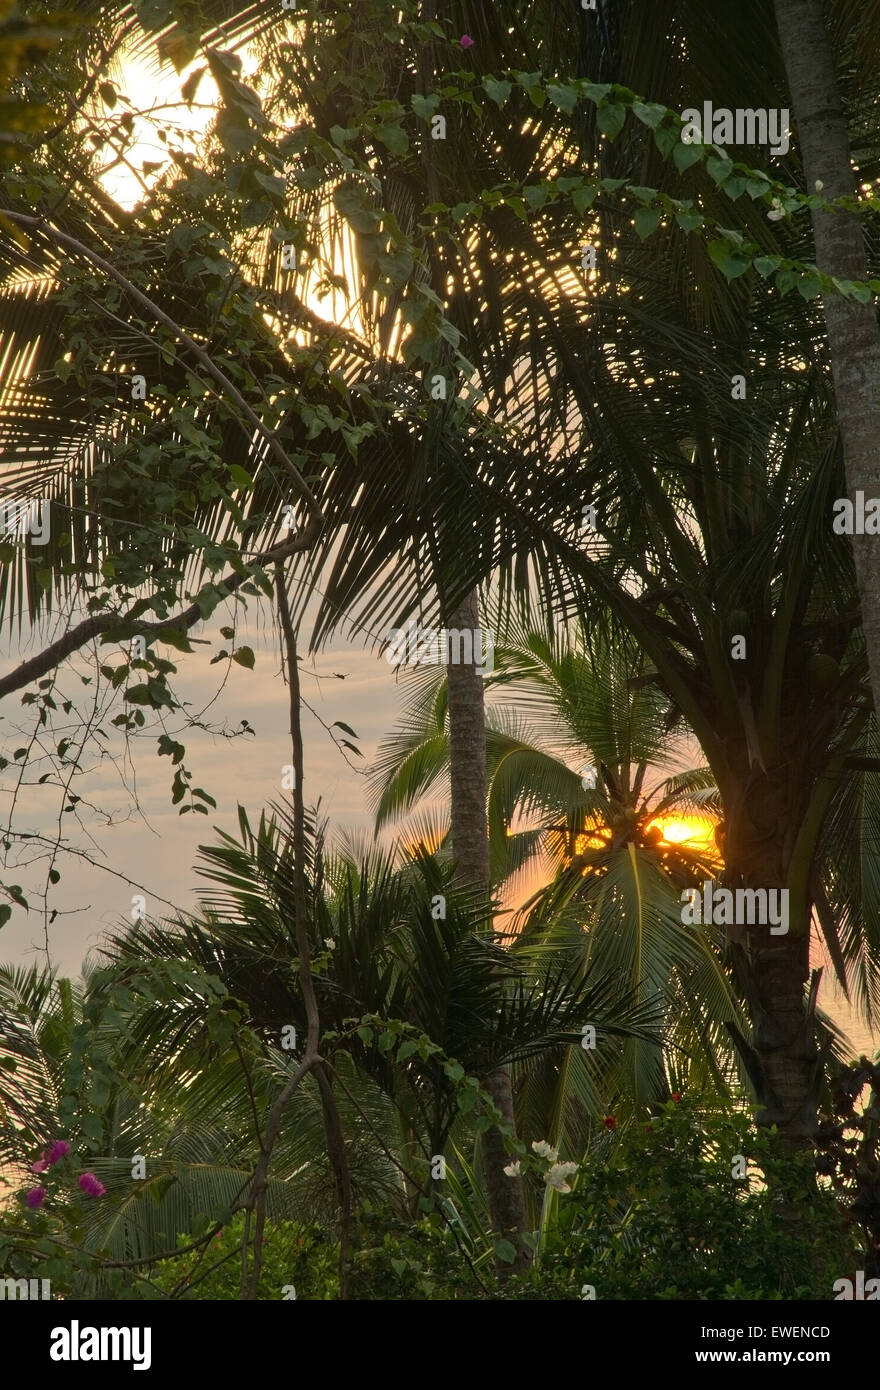 Sunrise platzen durch grünen Garten Palmen Baumbewuchs in Sri Lanka. Stockfoto